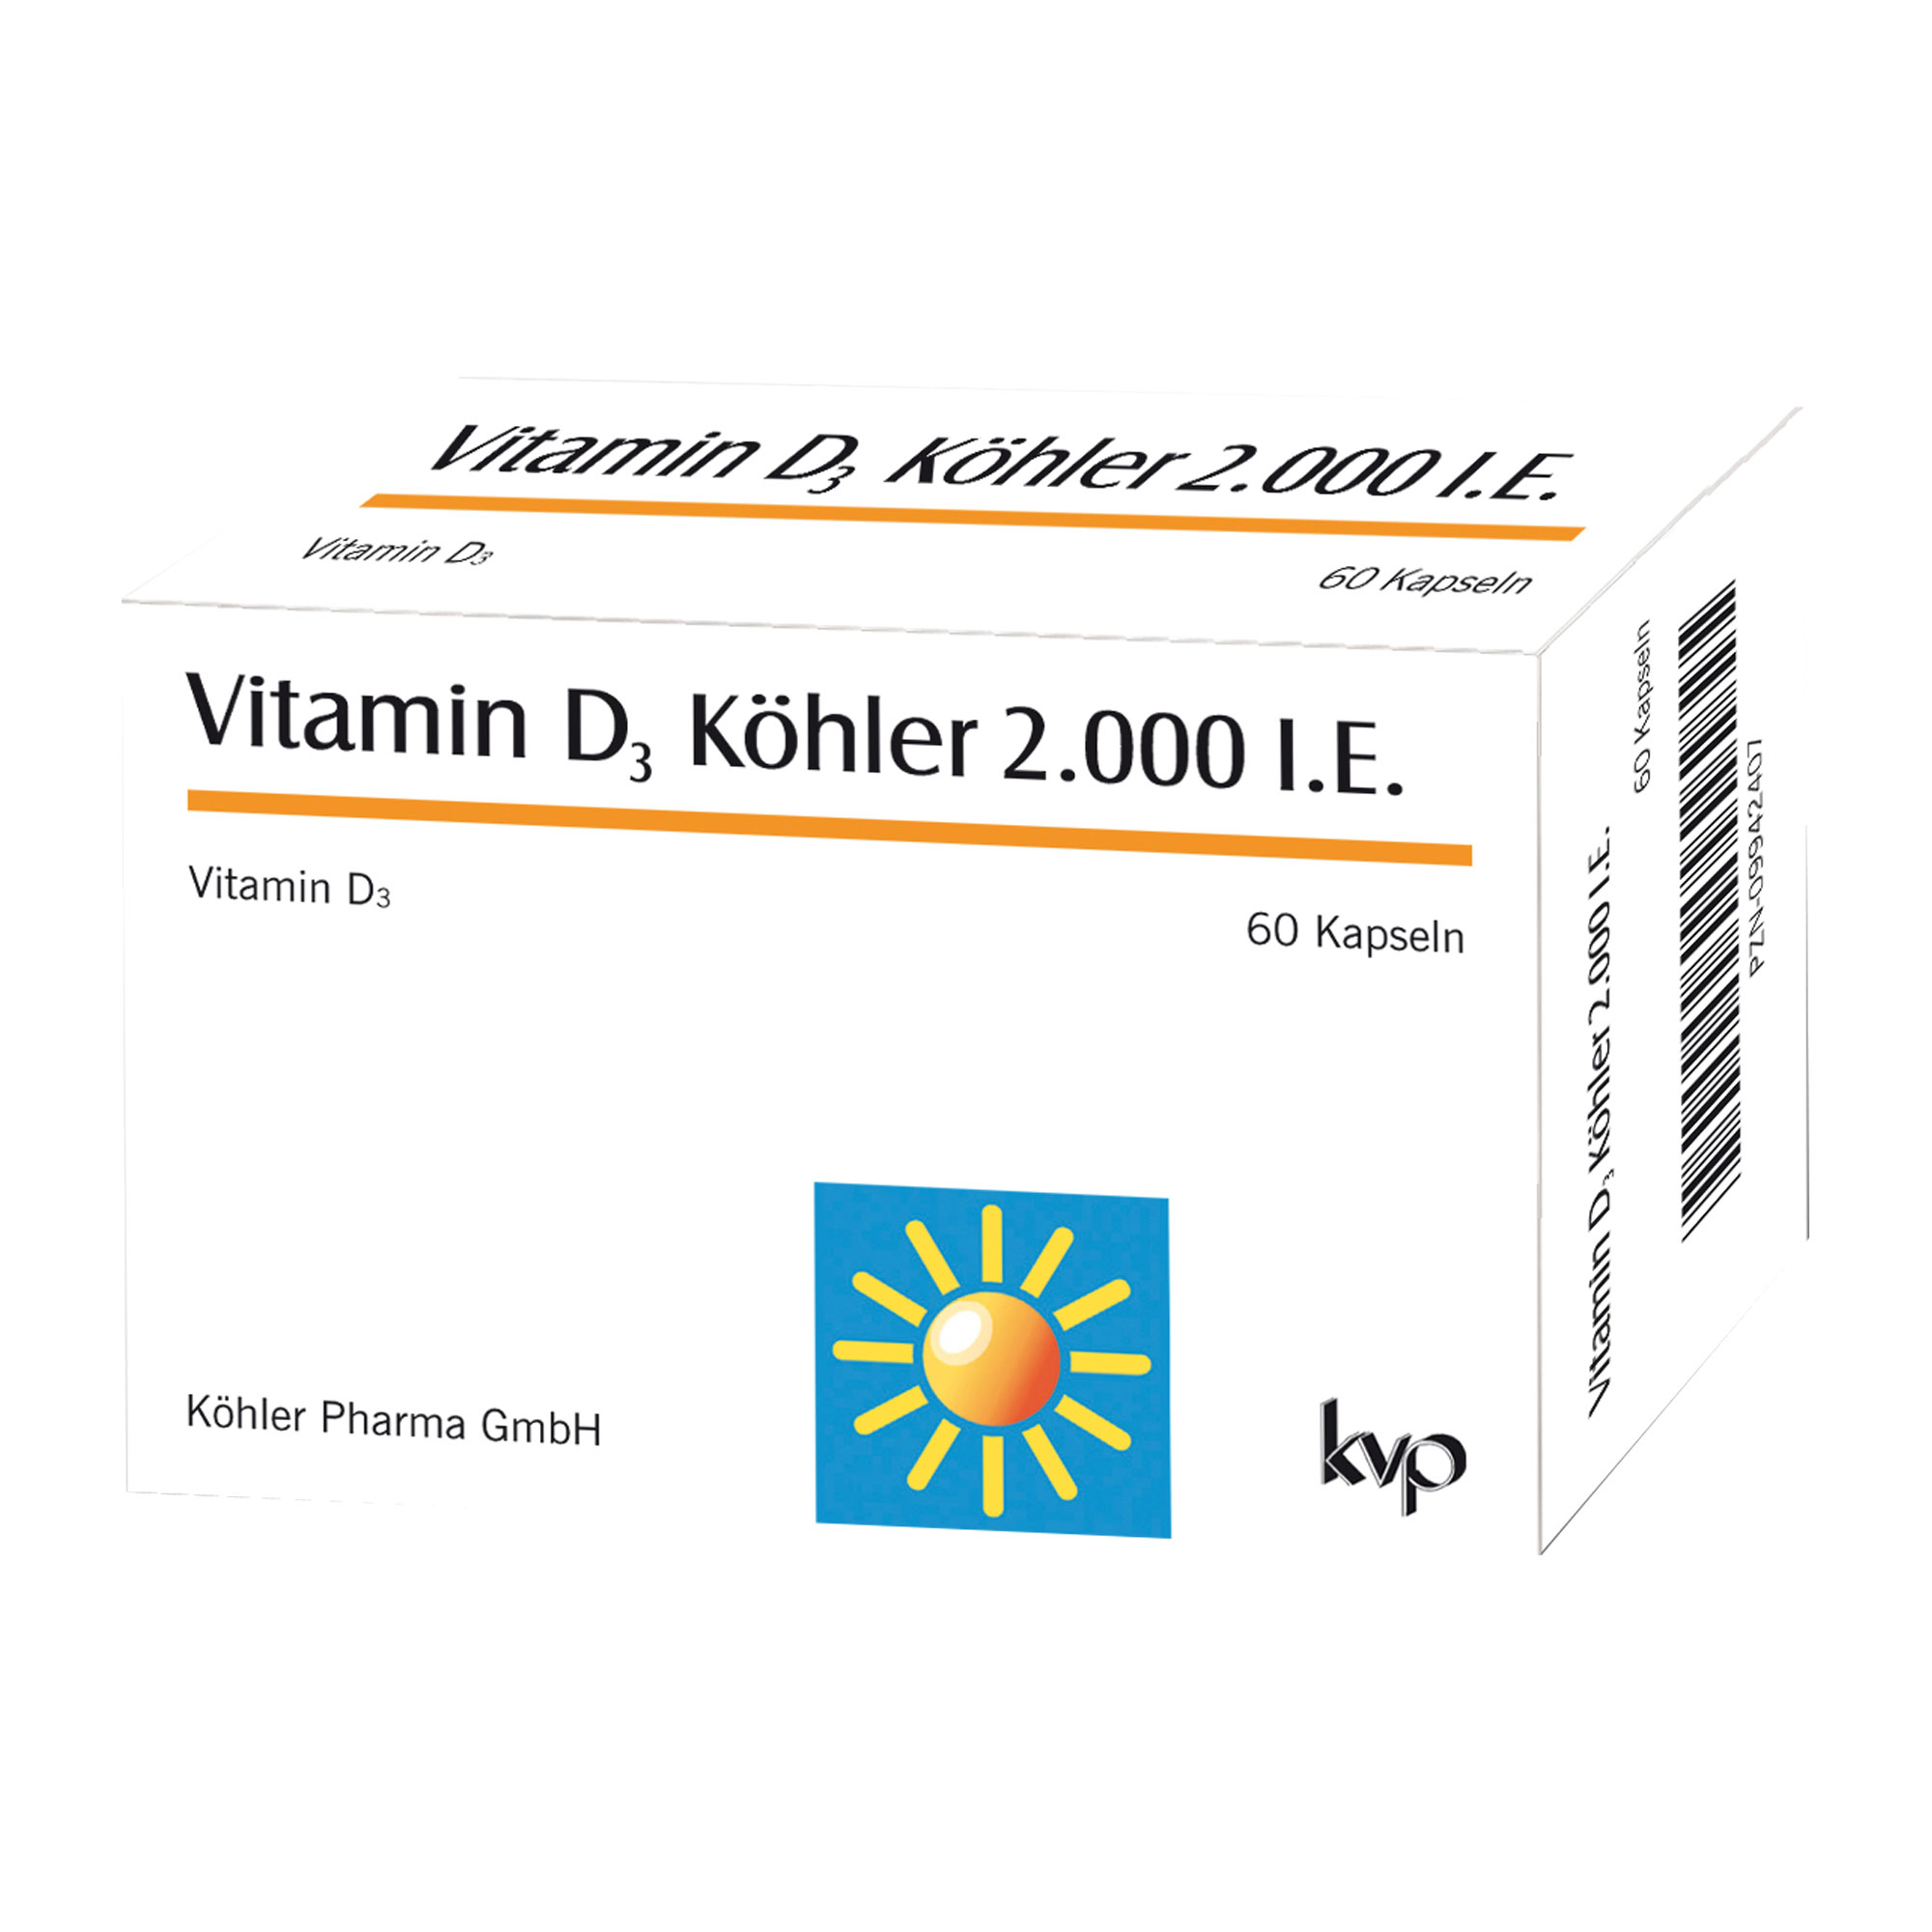 Nahrungsergänzungsmittel mit Vitamin D3.